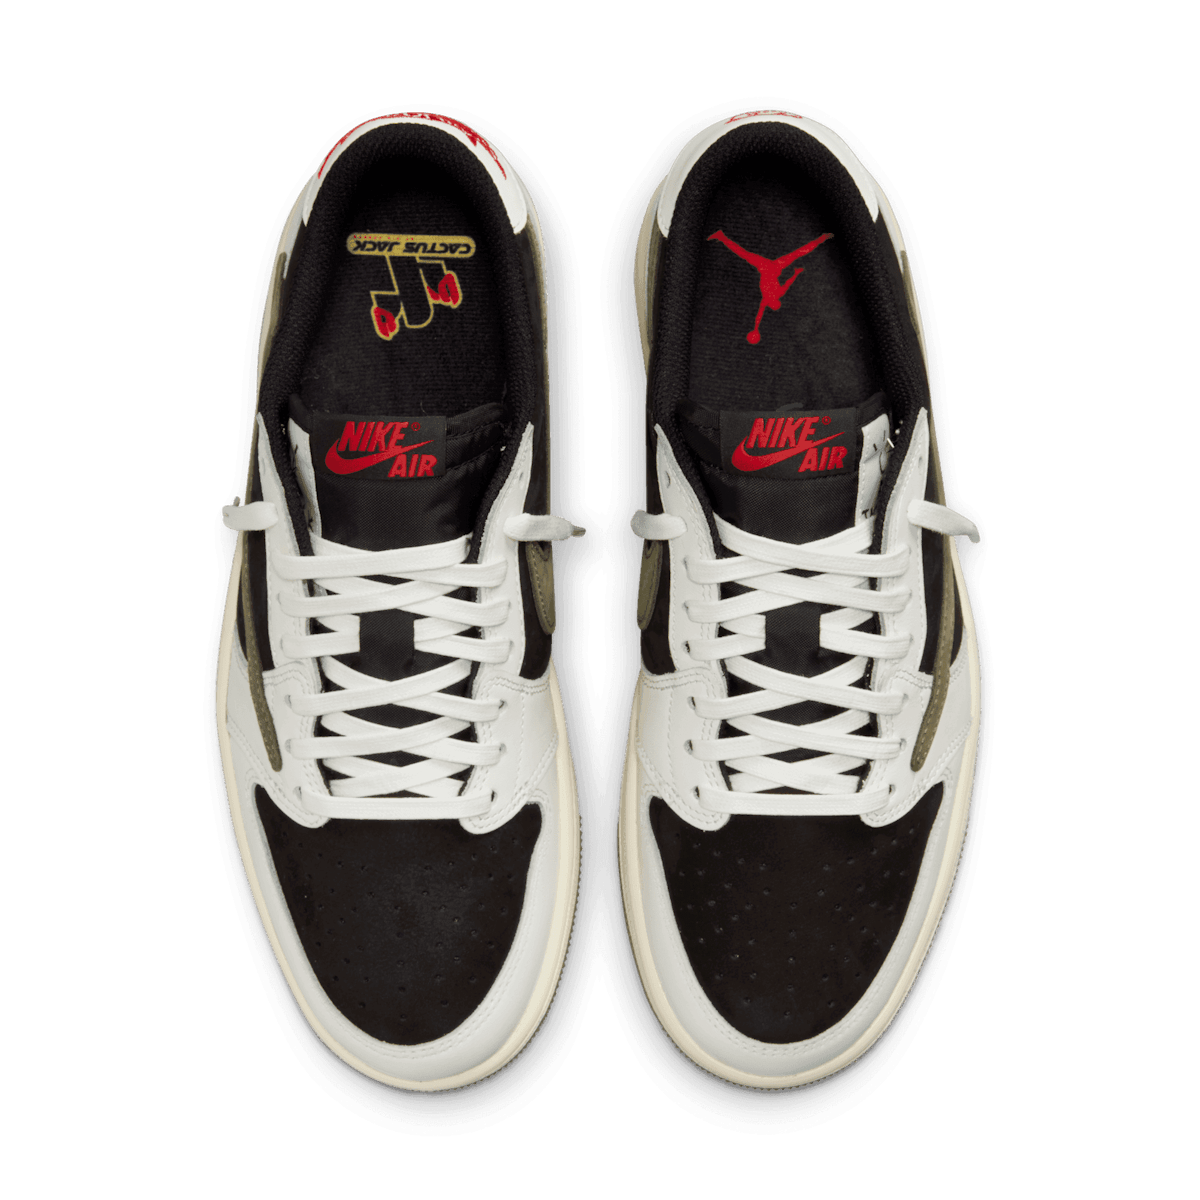 Jordan 4 Retro Travis Scott Olive Men's - Sneakers - US